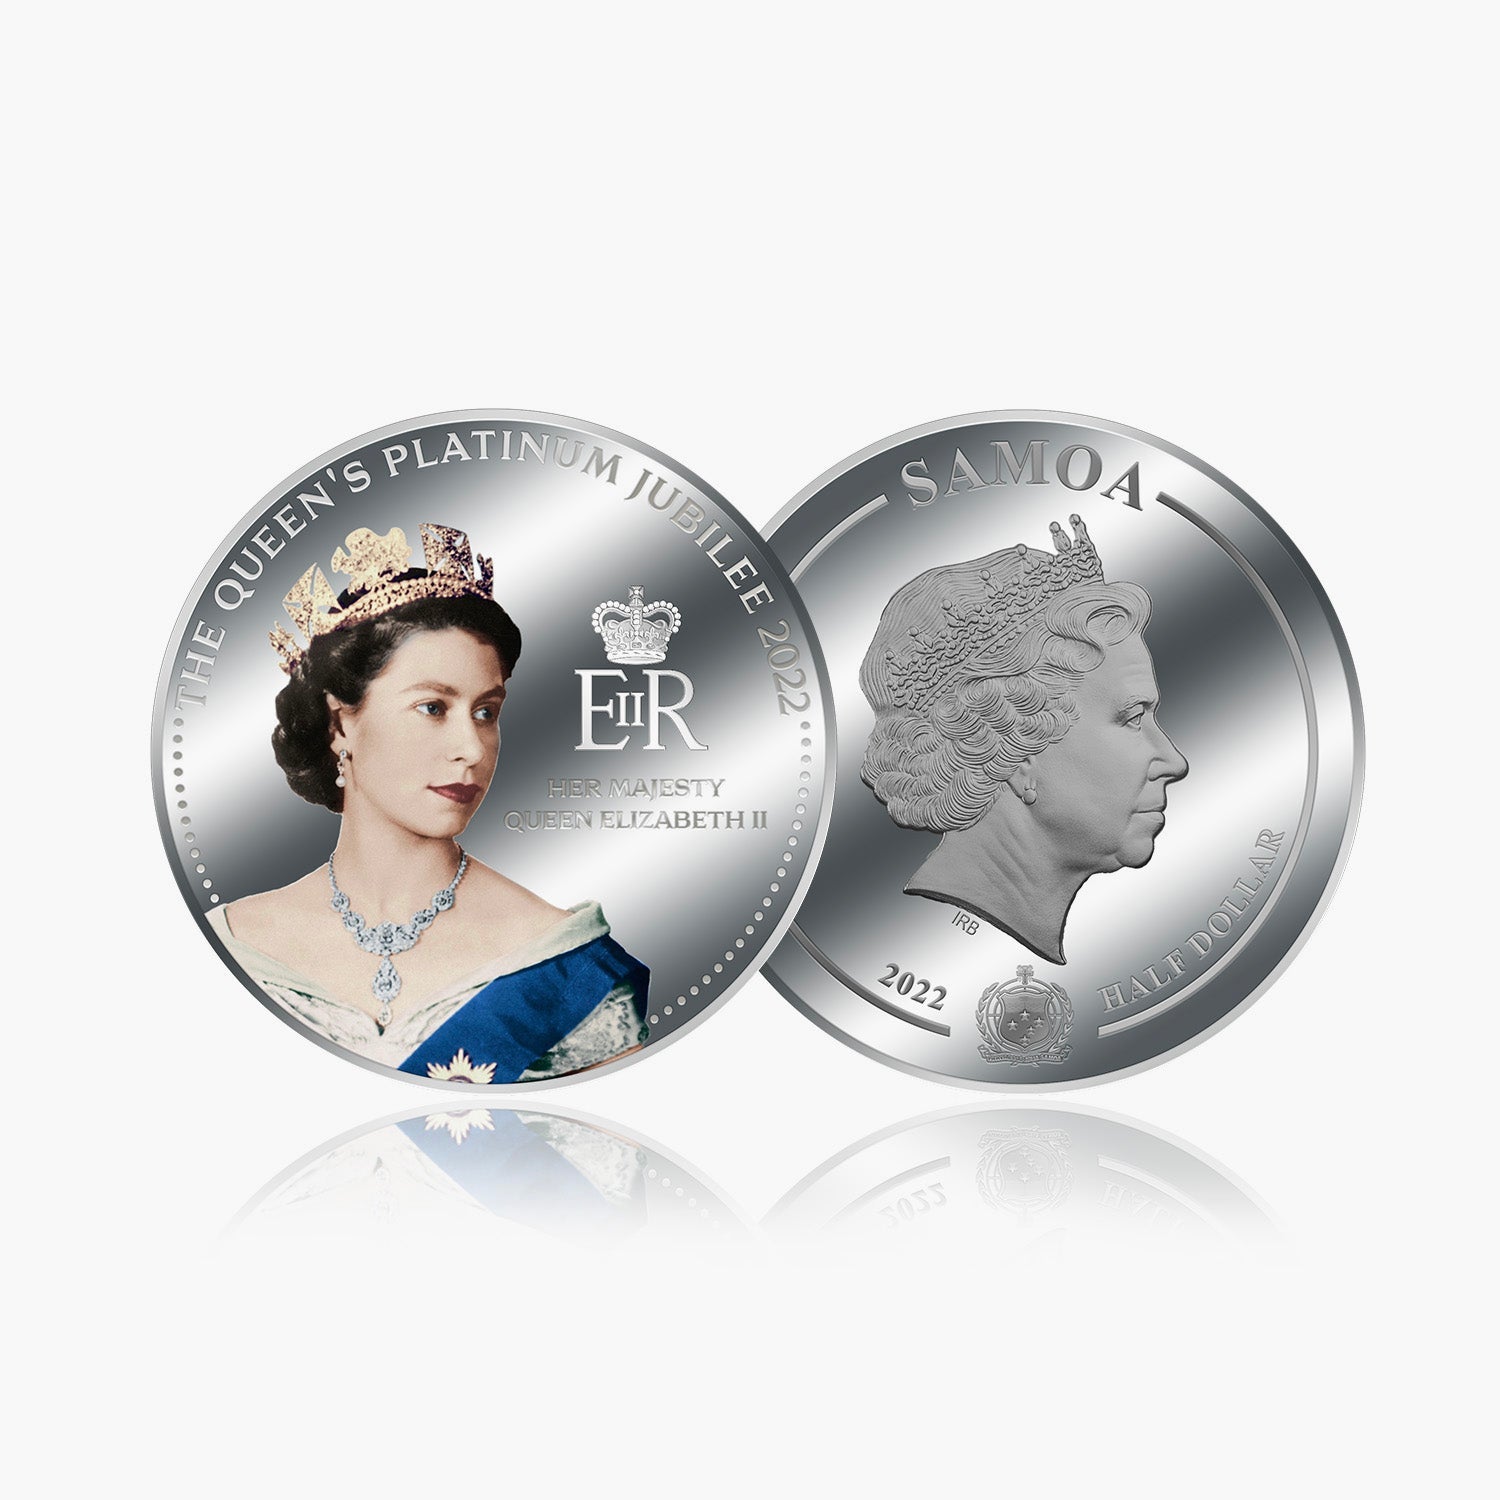 Her Majesty Queen Elizabeth II Coronation Coin & Stamp Bundle